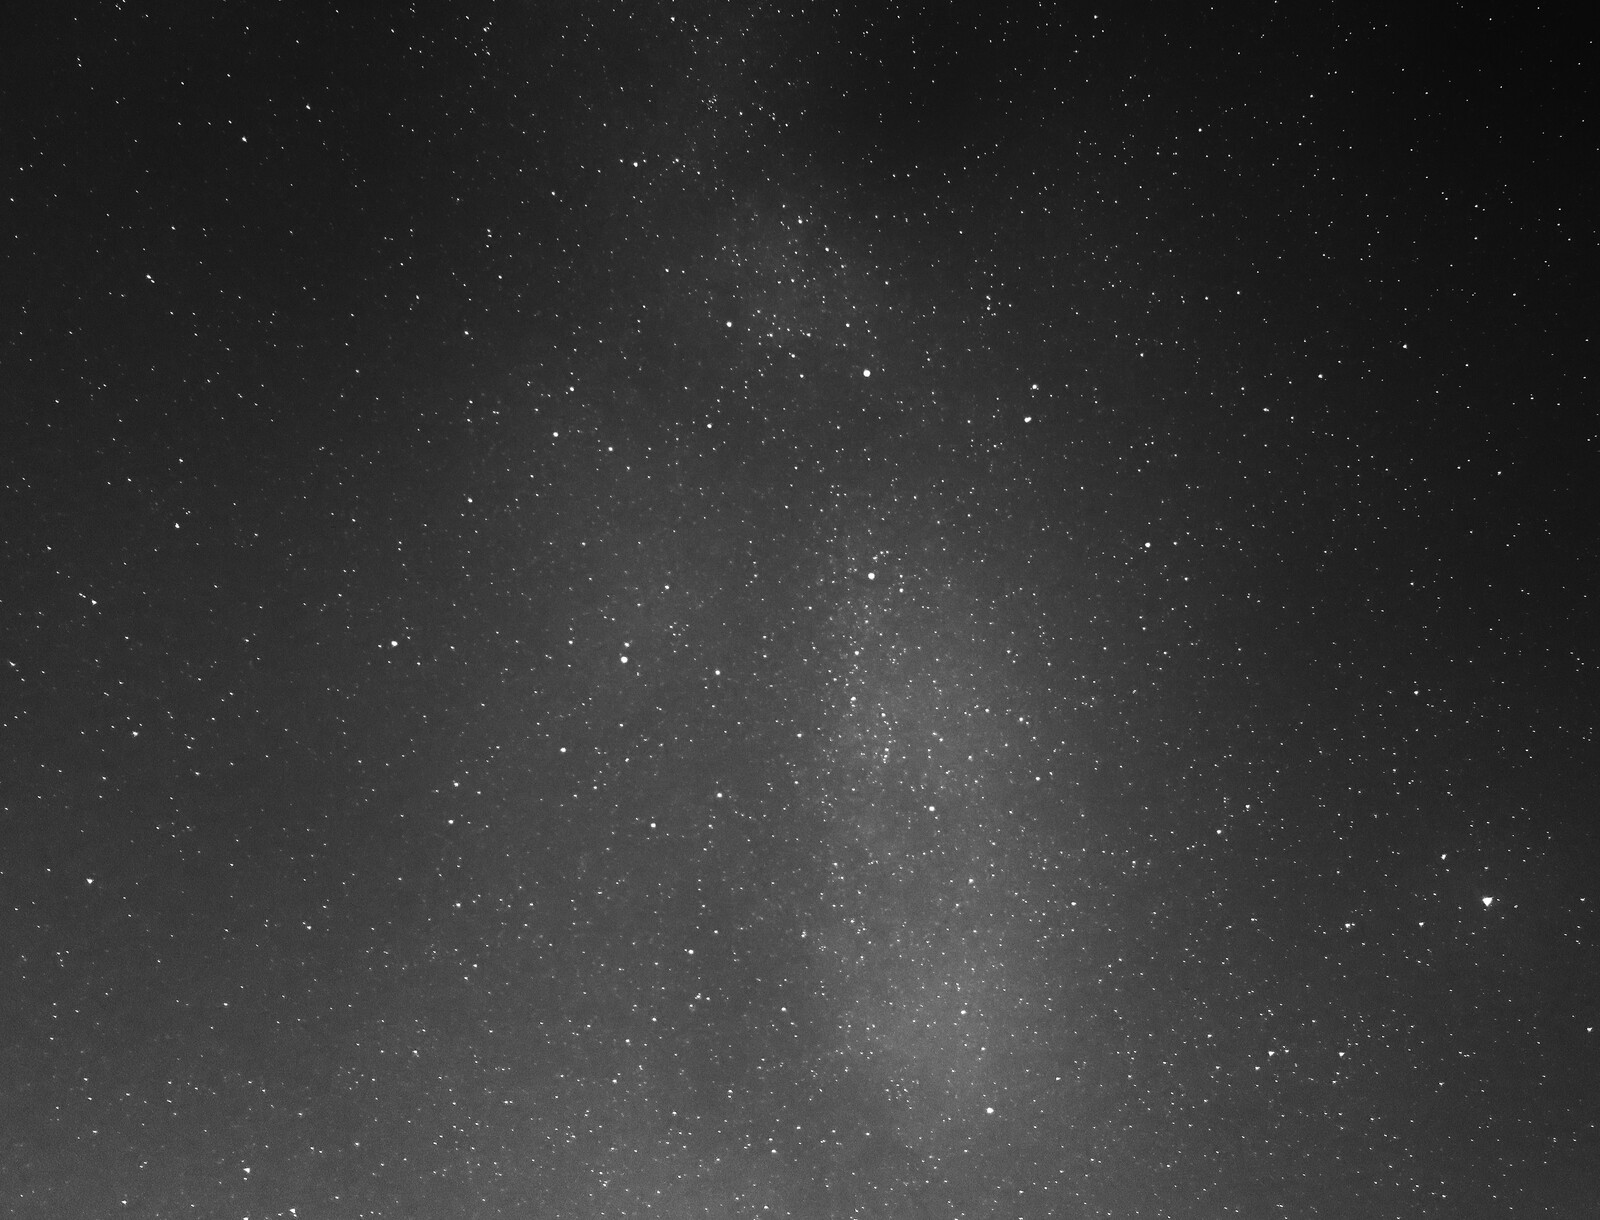 Milky Way going through Cygnus